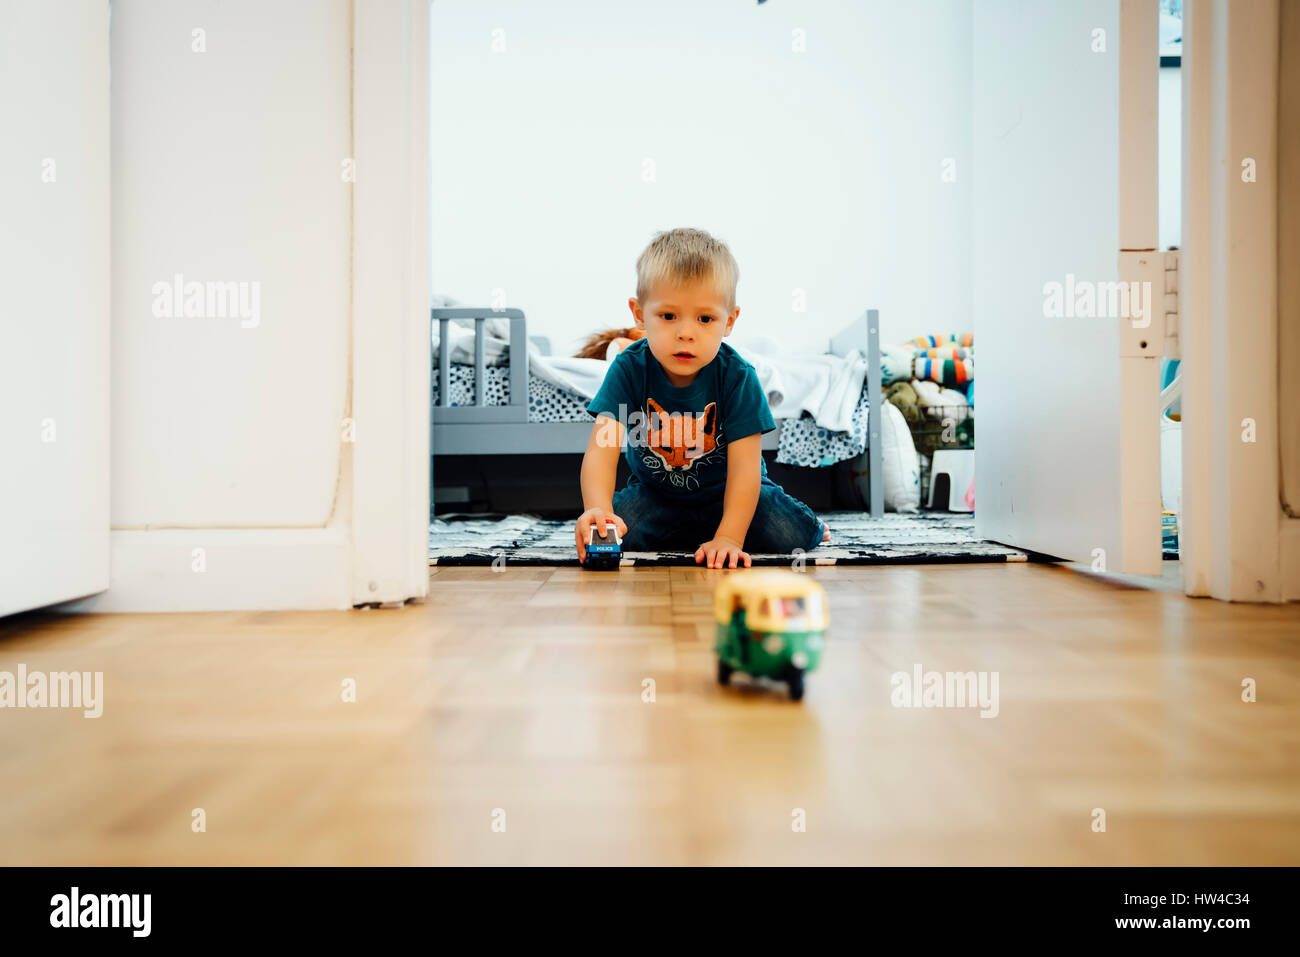 Boy kneeling on floor pushing toy cars Stock Photo